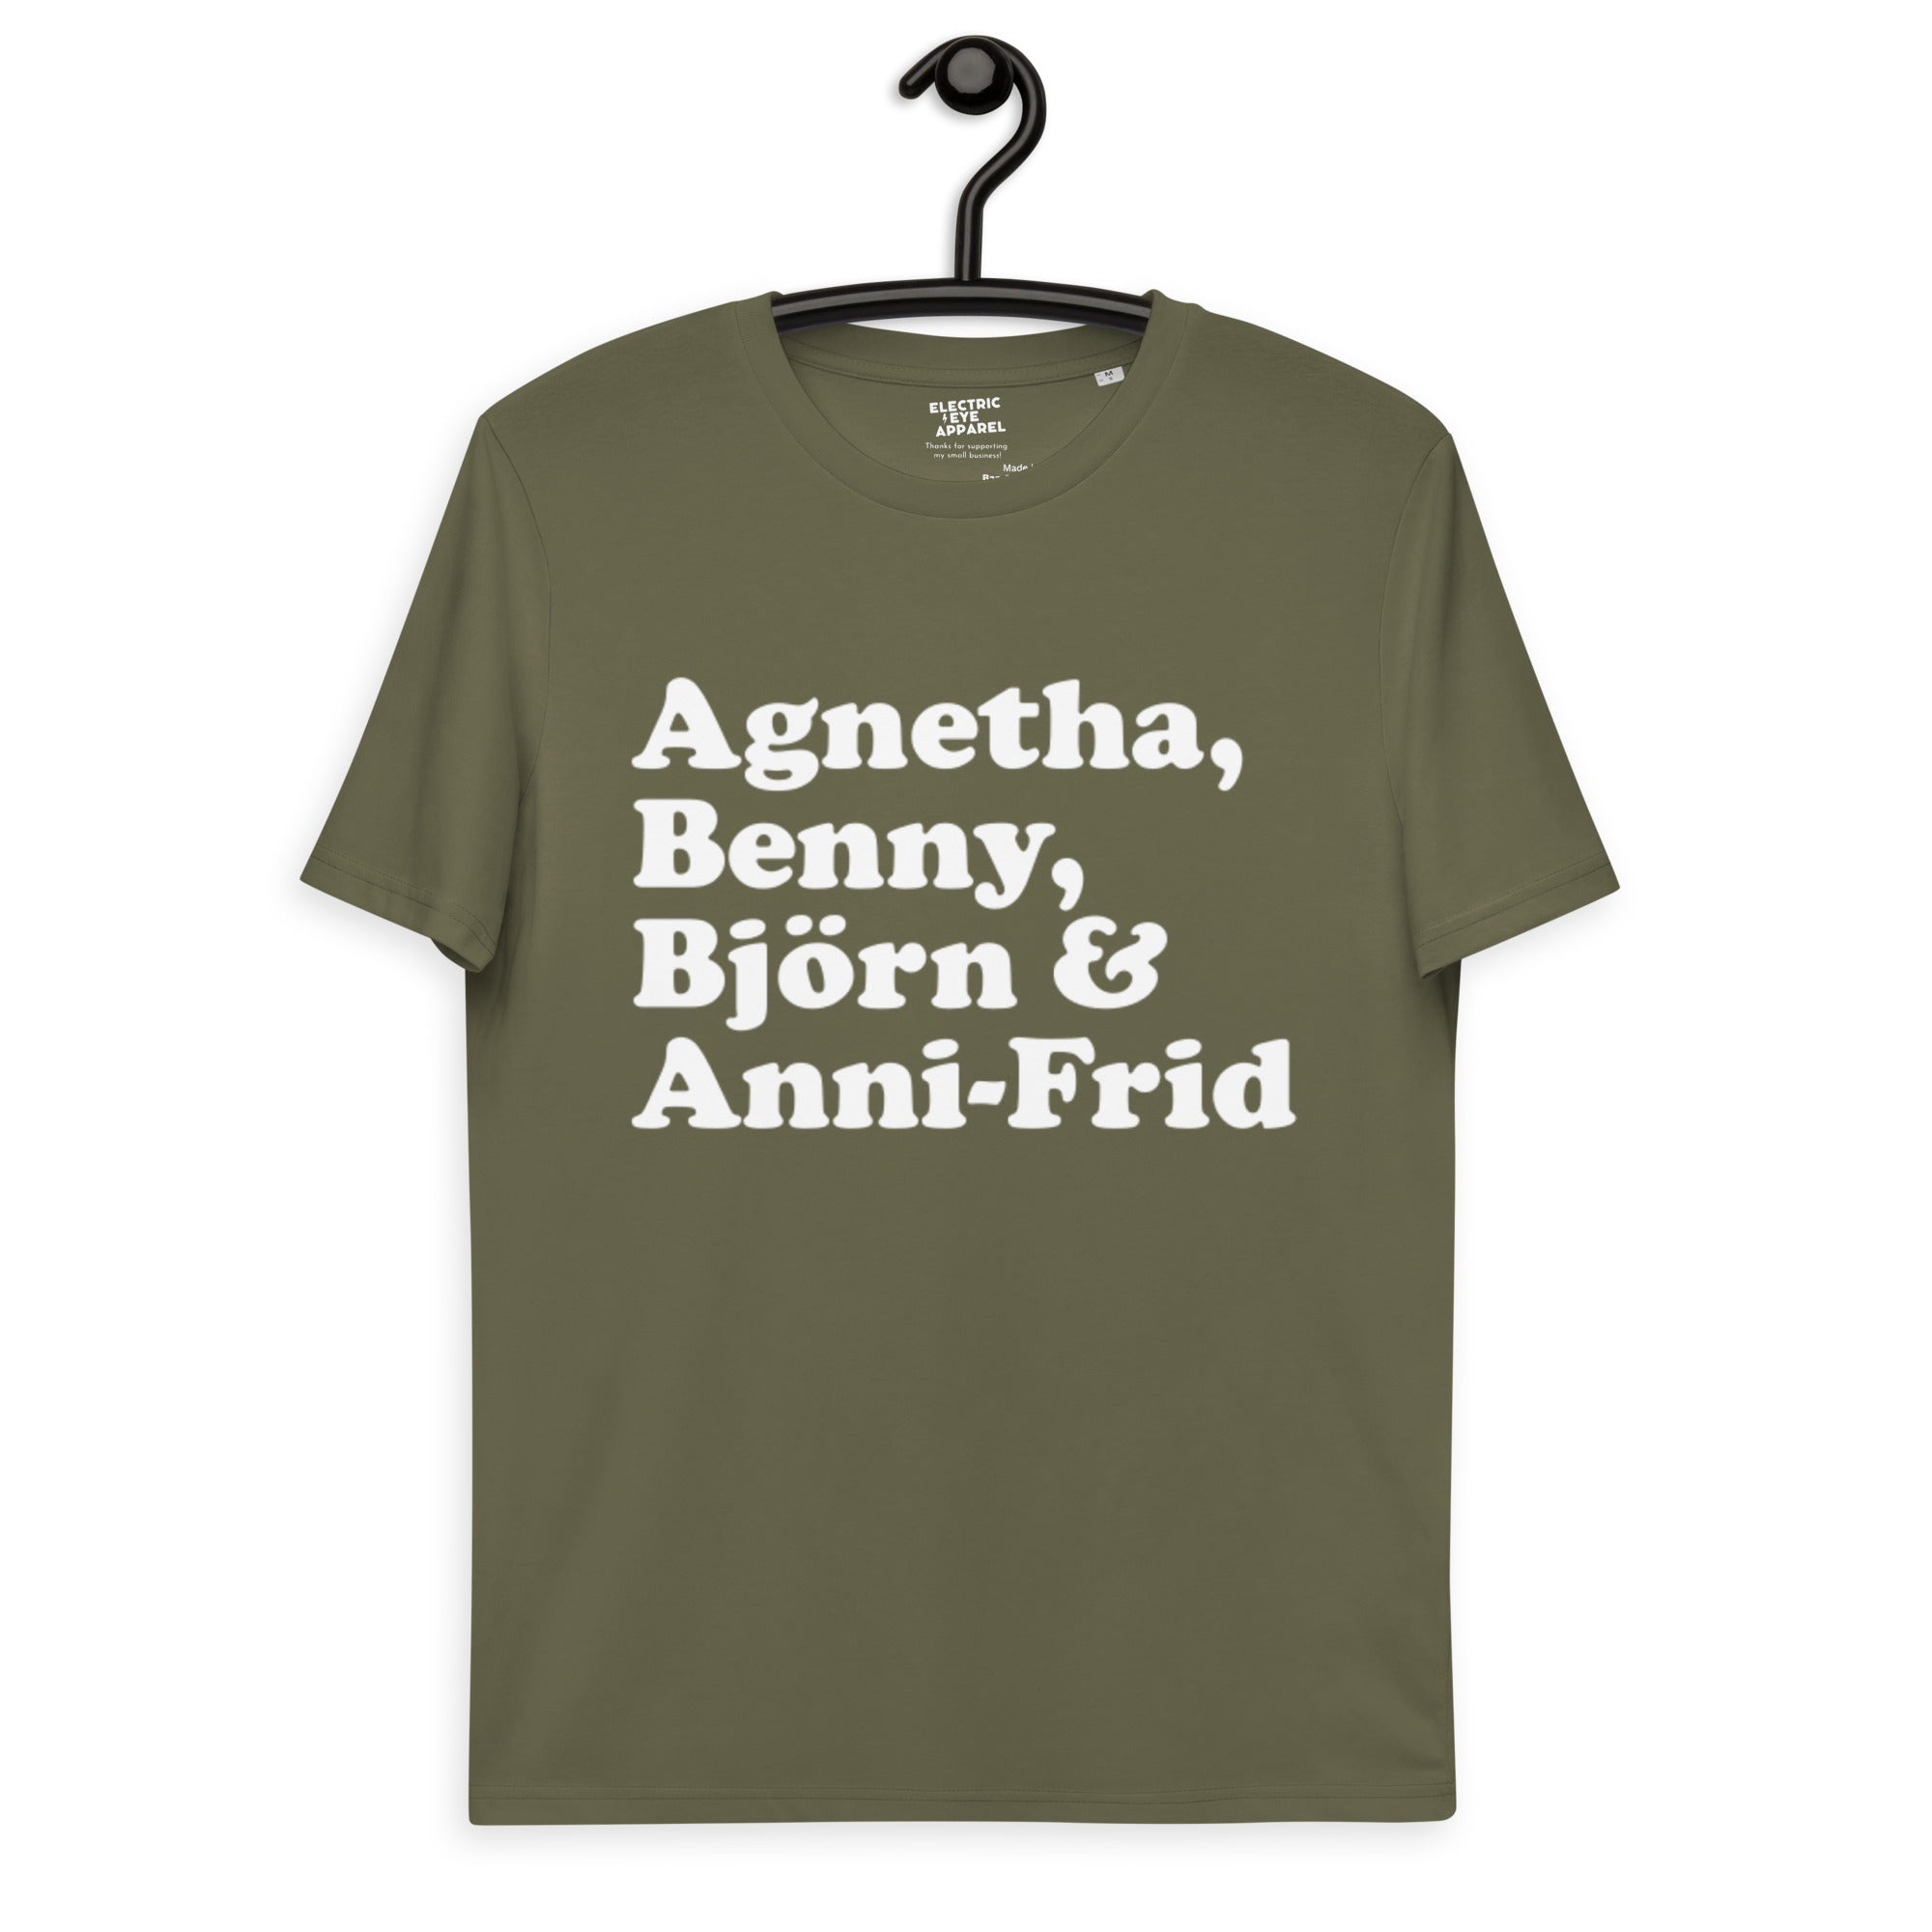 Abba inspired band member name premium printed unisex super soft organic cotton t-shirt